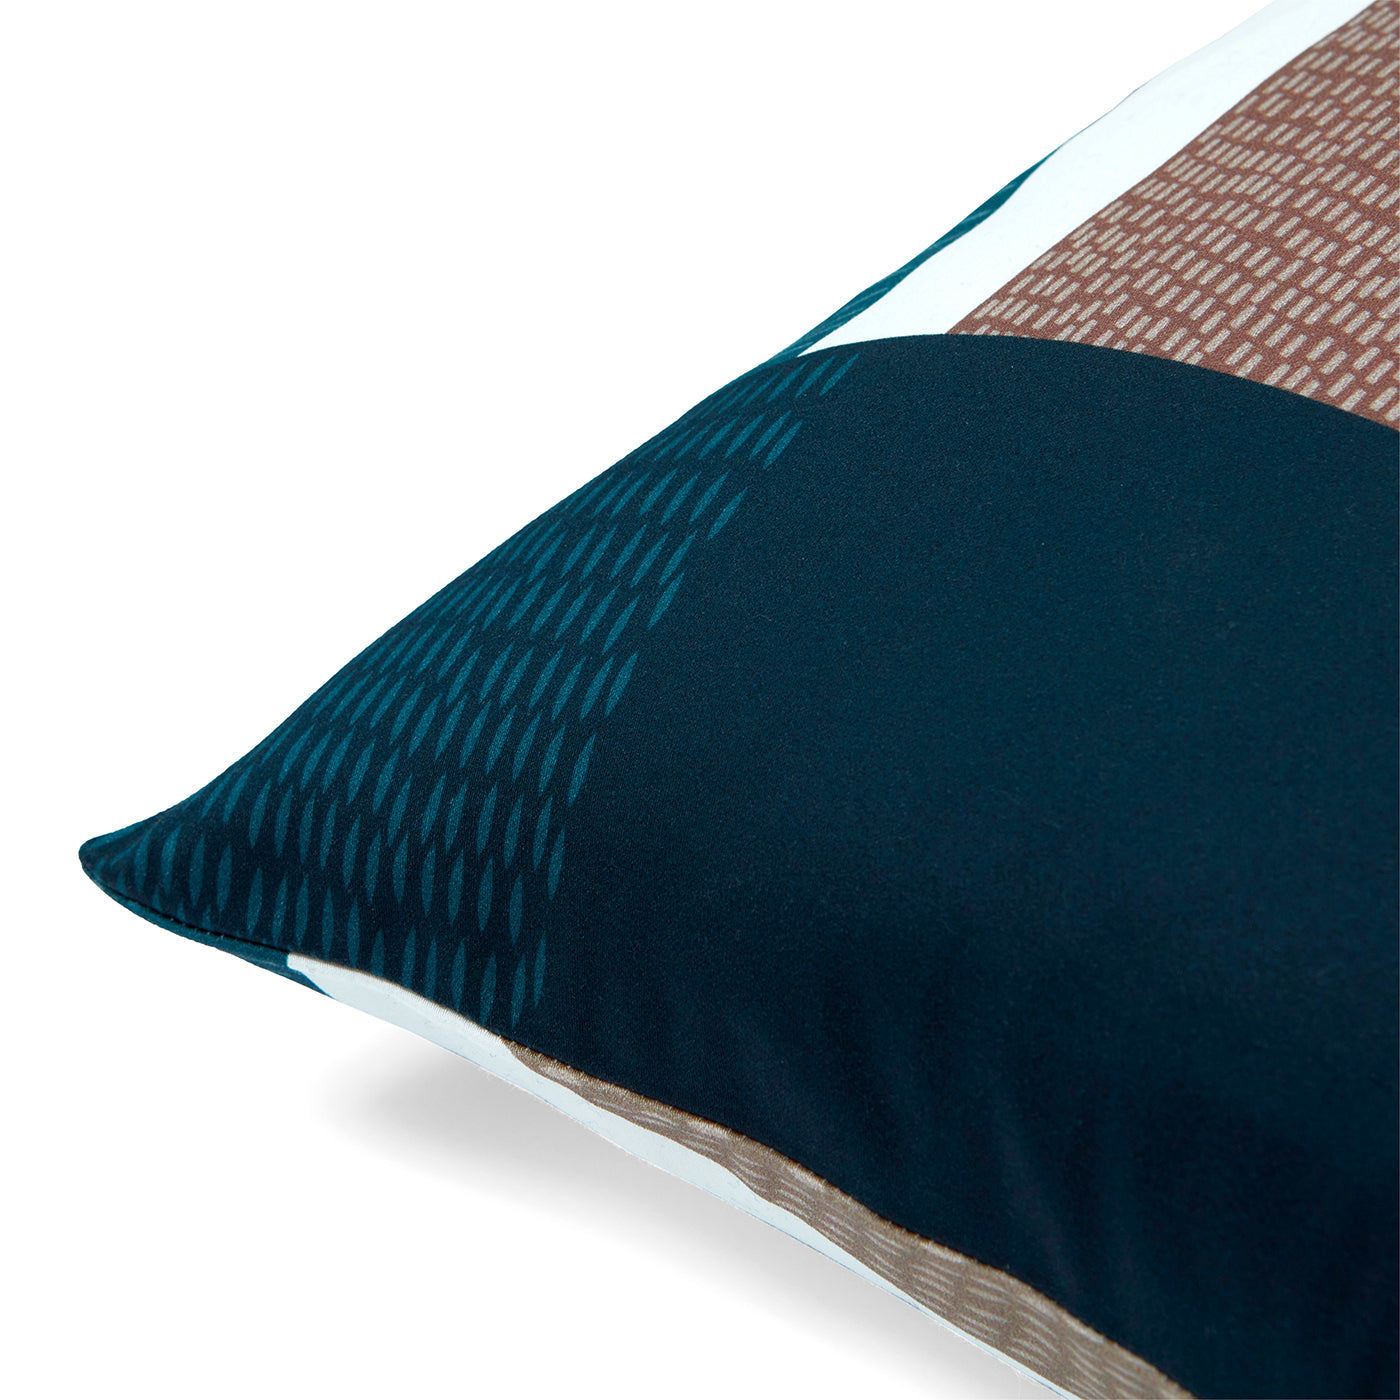 Sonia Set of 2 Rectangular Polychrome Cushions #7 - Alternative view 1